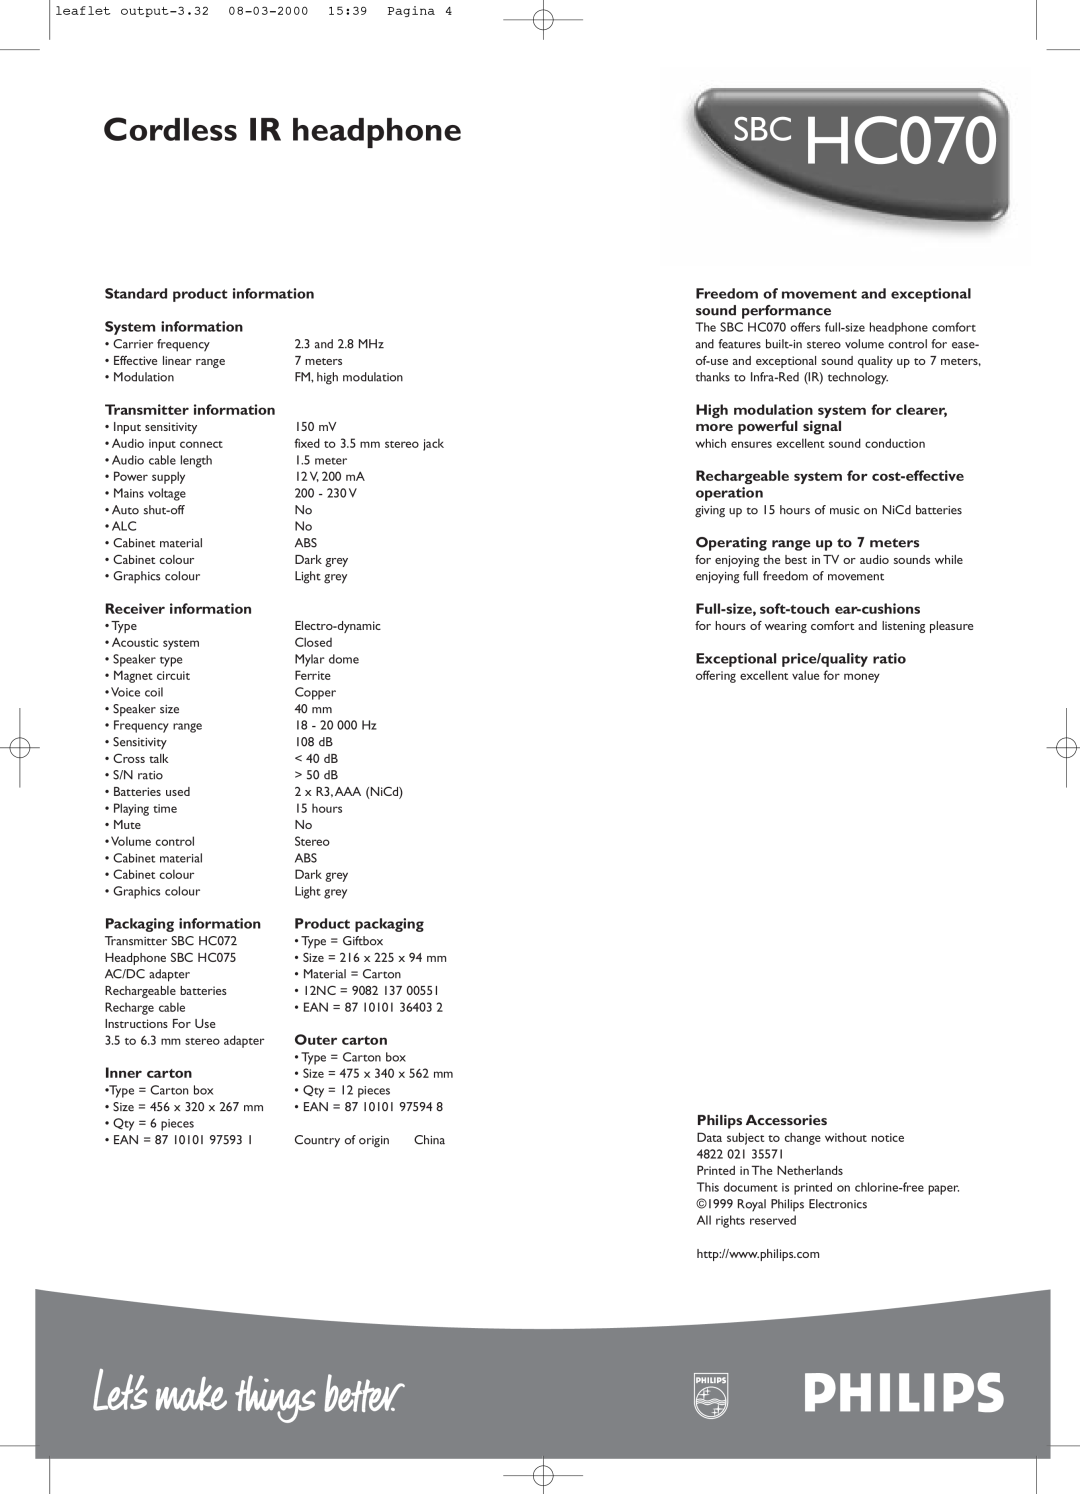 Philips SBC HC070 manual Cordless IR headphone 